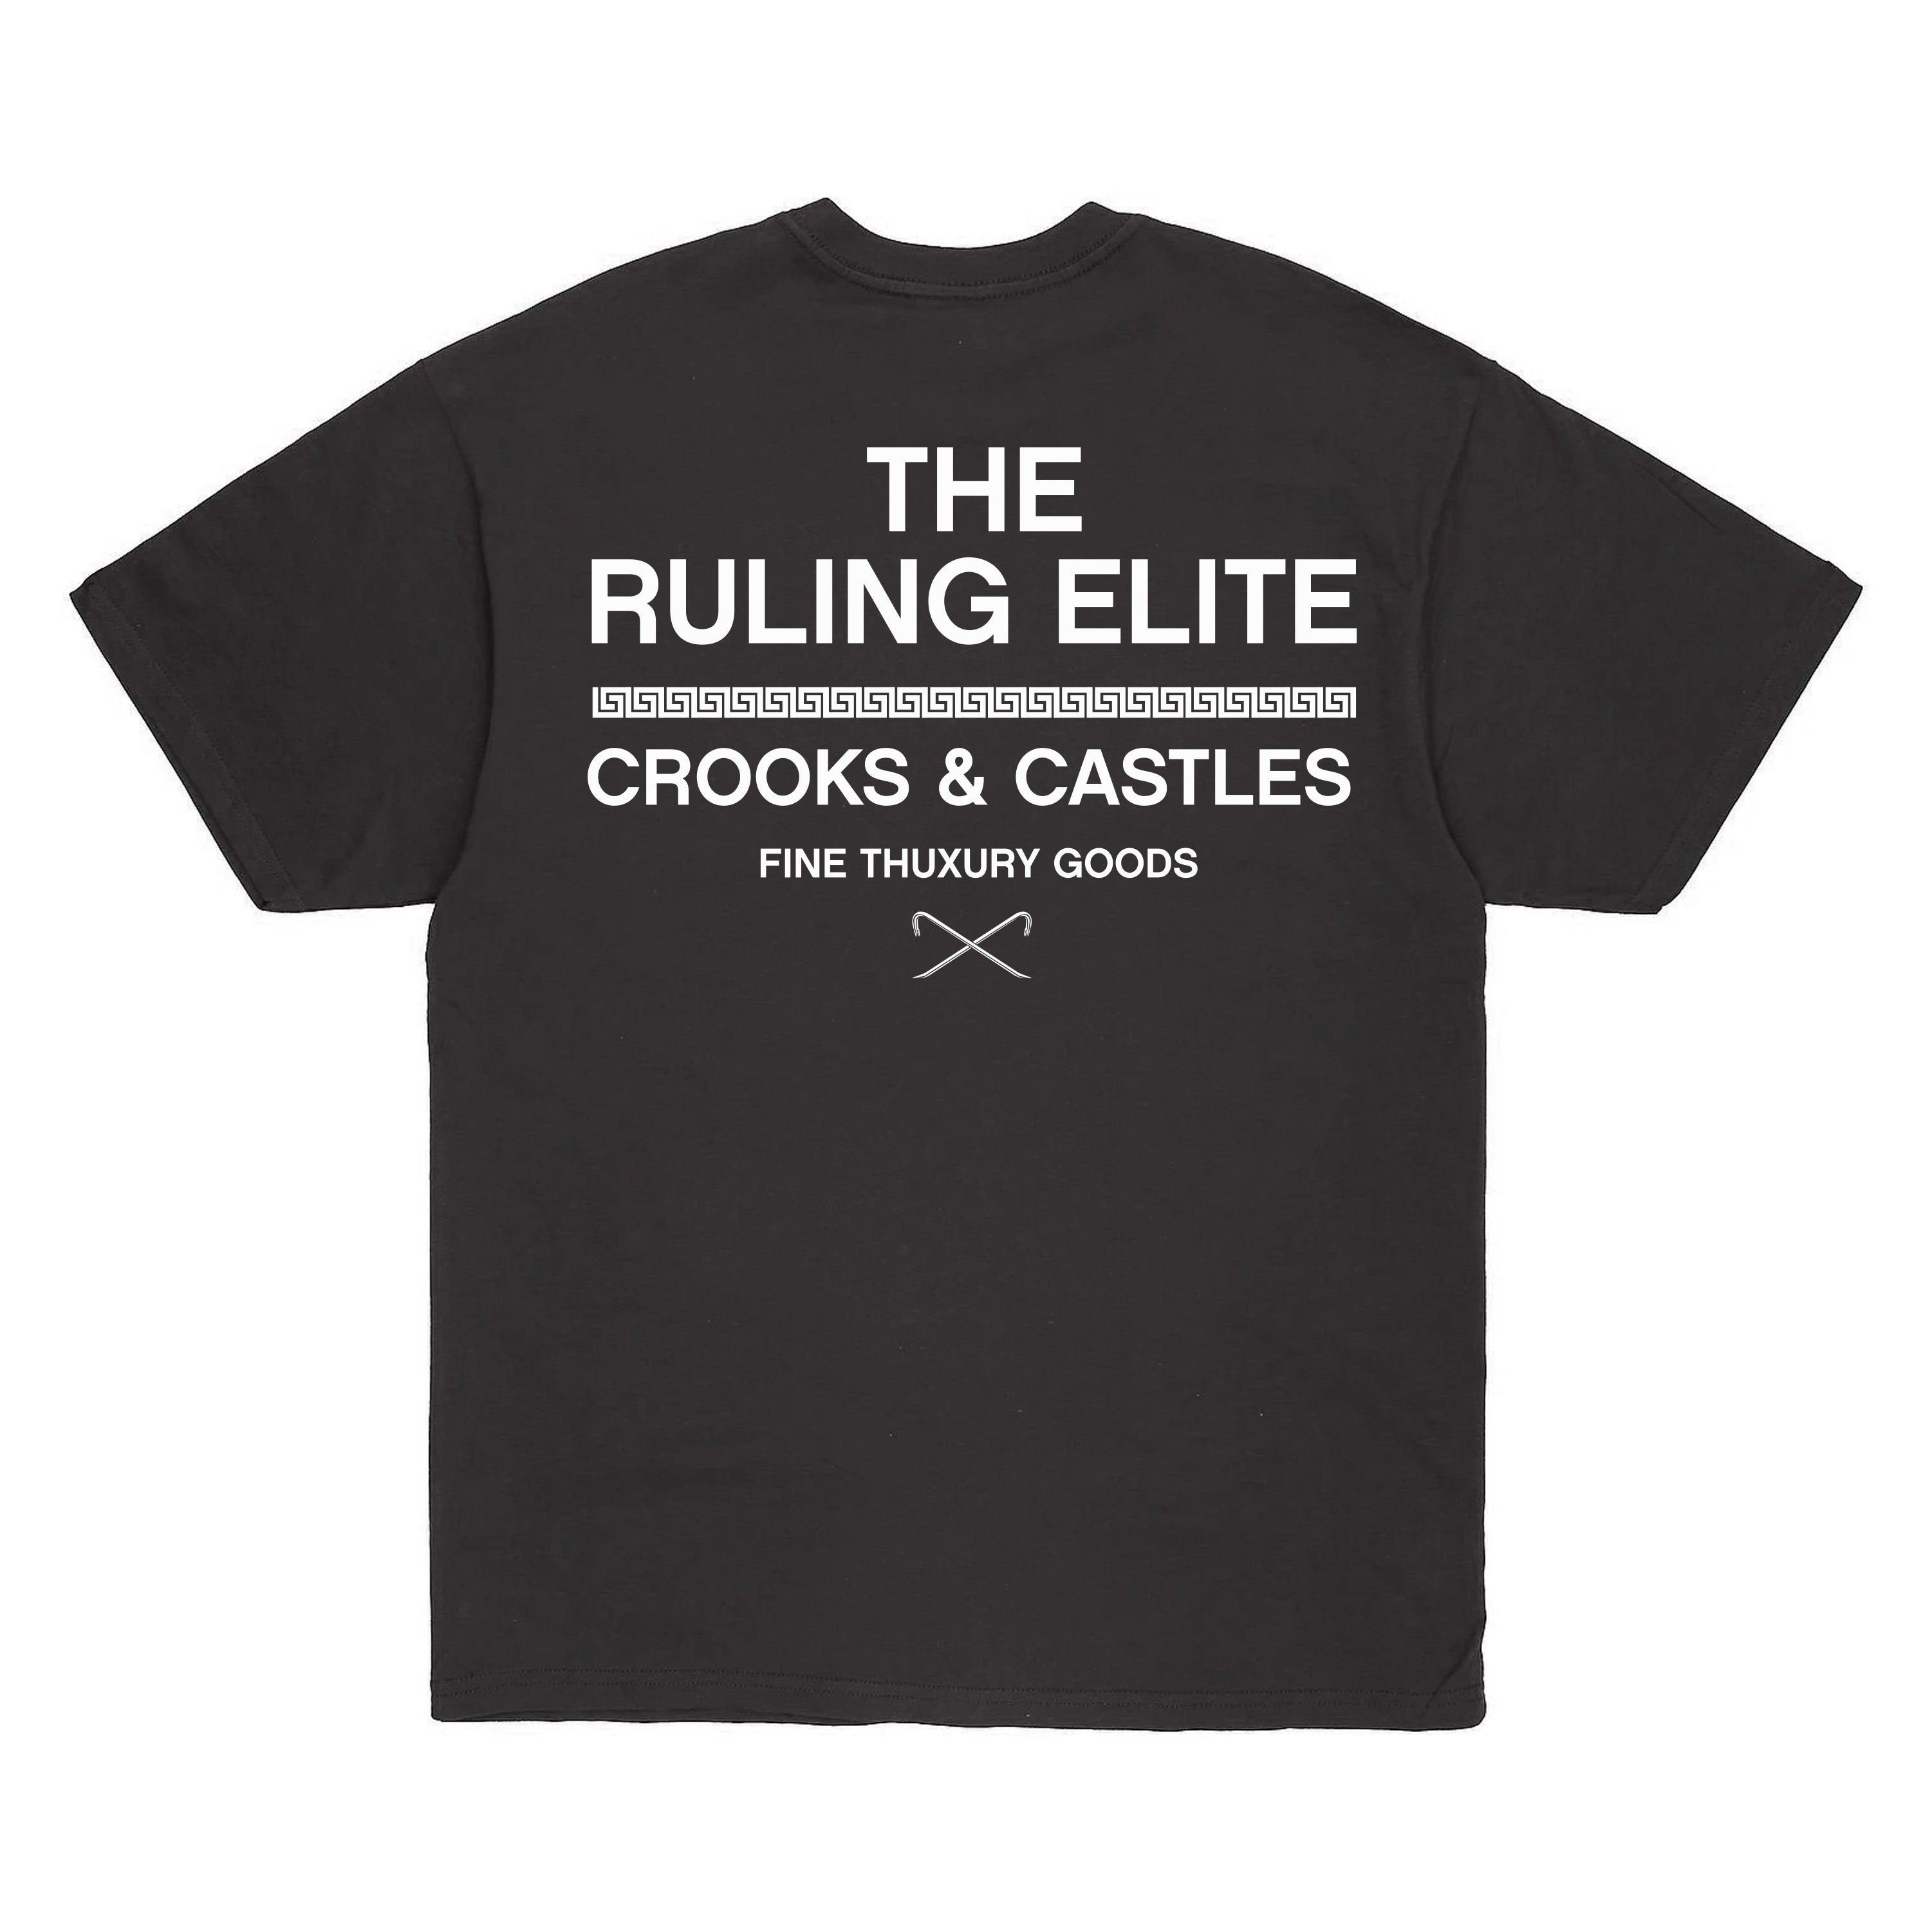 The Ruling Elite Tee